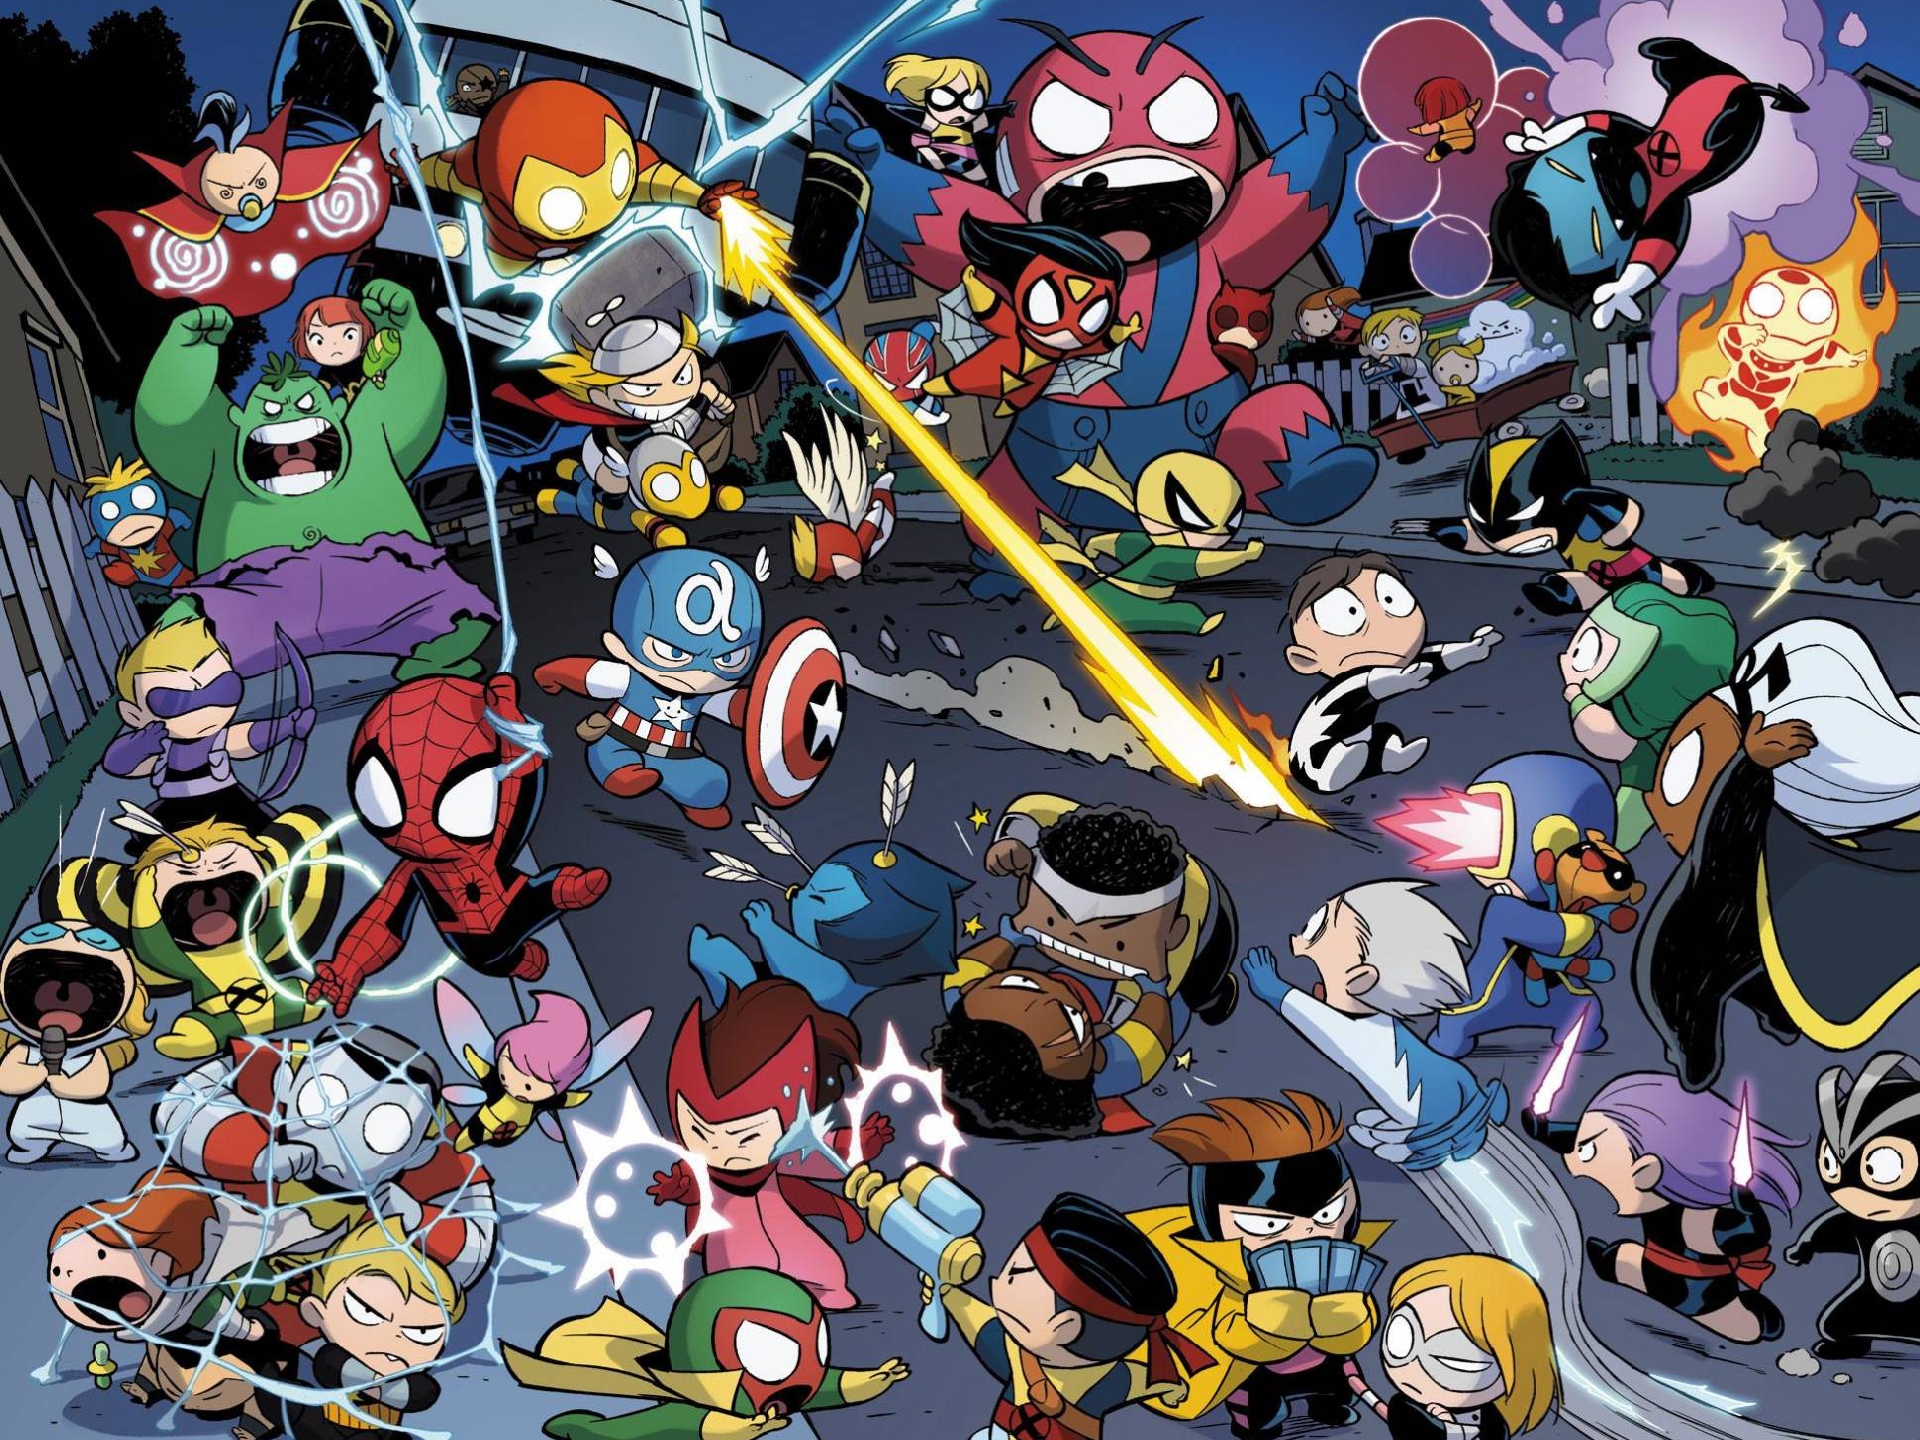 vision (marvel comics), colossus, quicksilver (marvel comics), comics, avengers vs x men babies, angel (marvel comics), avengers, banshee (marvel comics), beast (marvel comics), bishop (marvel comics), black widow, captain america, carol danvers, cyclops (marvel comics), dazzler (marvel comics), gambit (marvel comics), giant man, havok (marvel comics), hawkeye, hope summers, hulk, human torch (marvel comics), iron fist (marvel comics), iron man, longshot (marvel comics), luke cage, ms marvel, namor the sub mariner, nick fury, nightcrawler (marvel comics), pixie (marvel comics), polaris (marvel comics), power pack, psylocke (marvel comics), scarlet witch, spider man, spider woman, storm (marvel comics), wasp (marvel comics), wolverine, x men Full HD